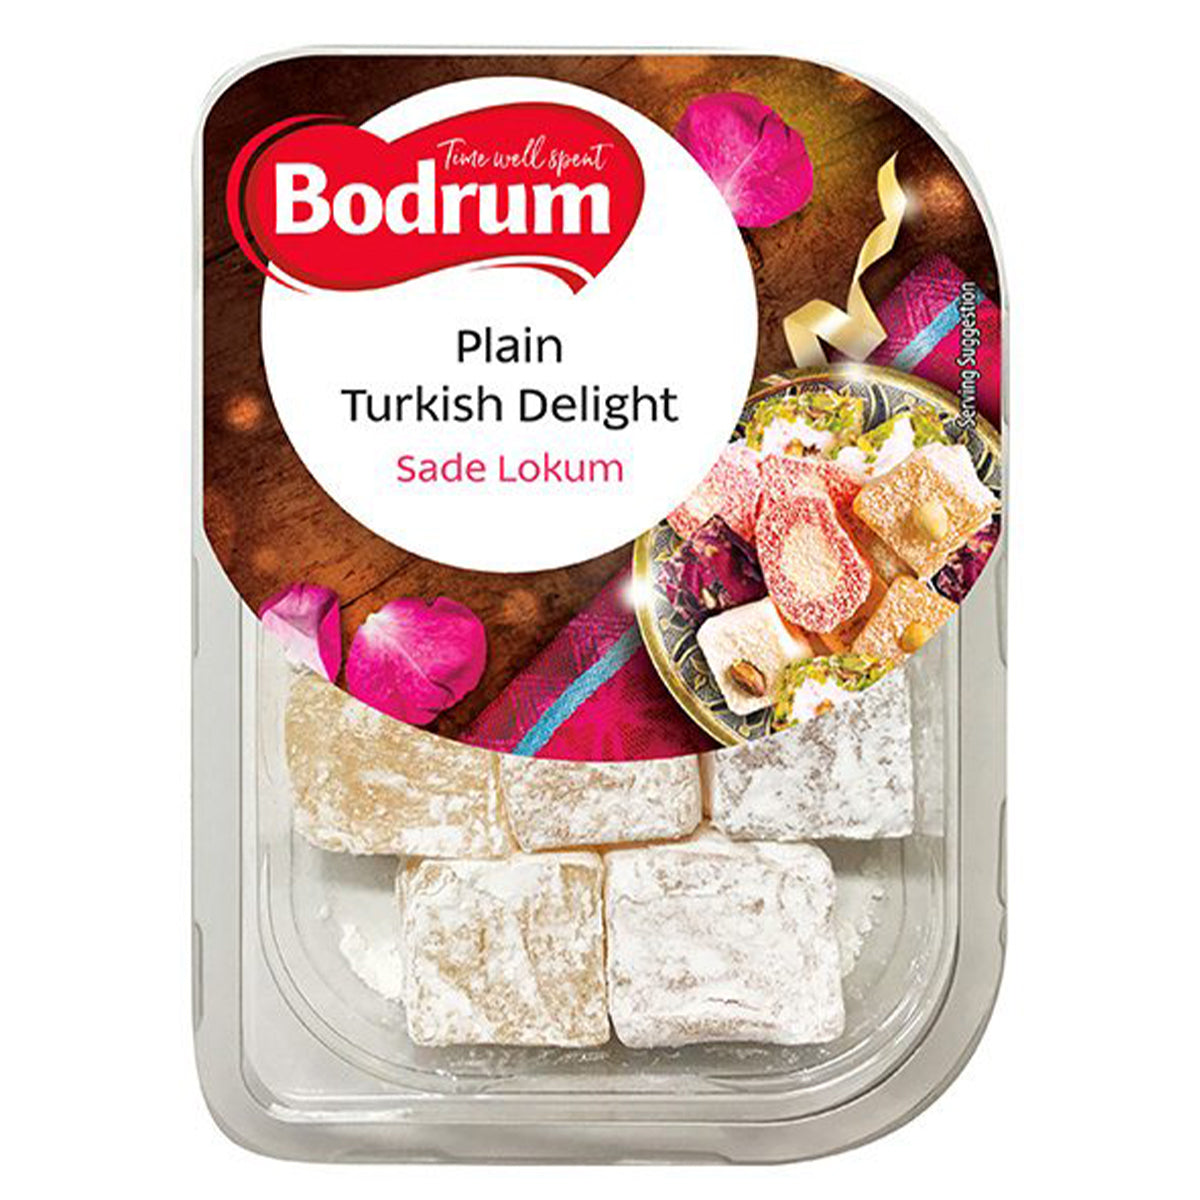 Bodrum - Plain Turkish Delight - 200g, made by Bodrum.